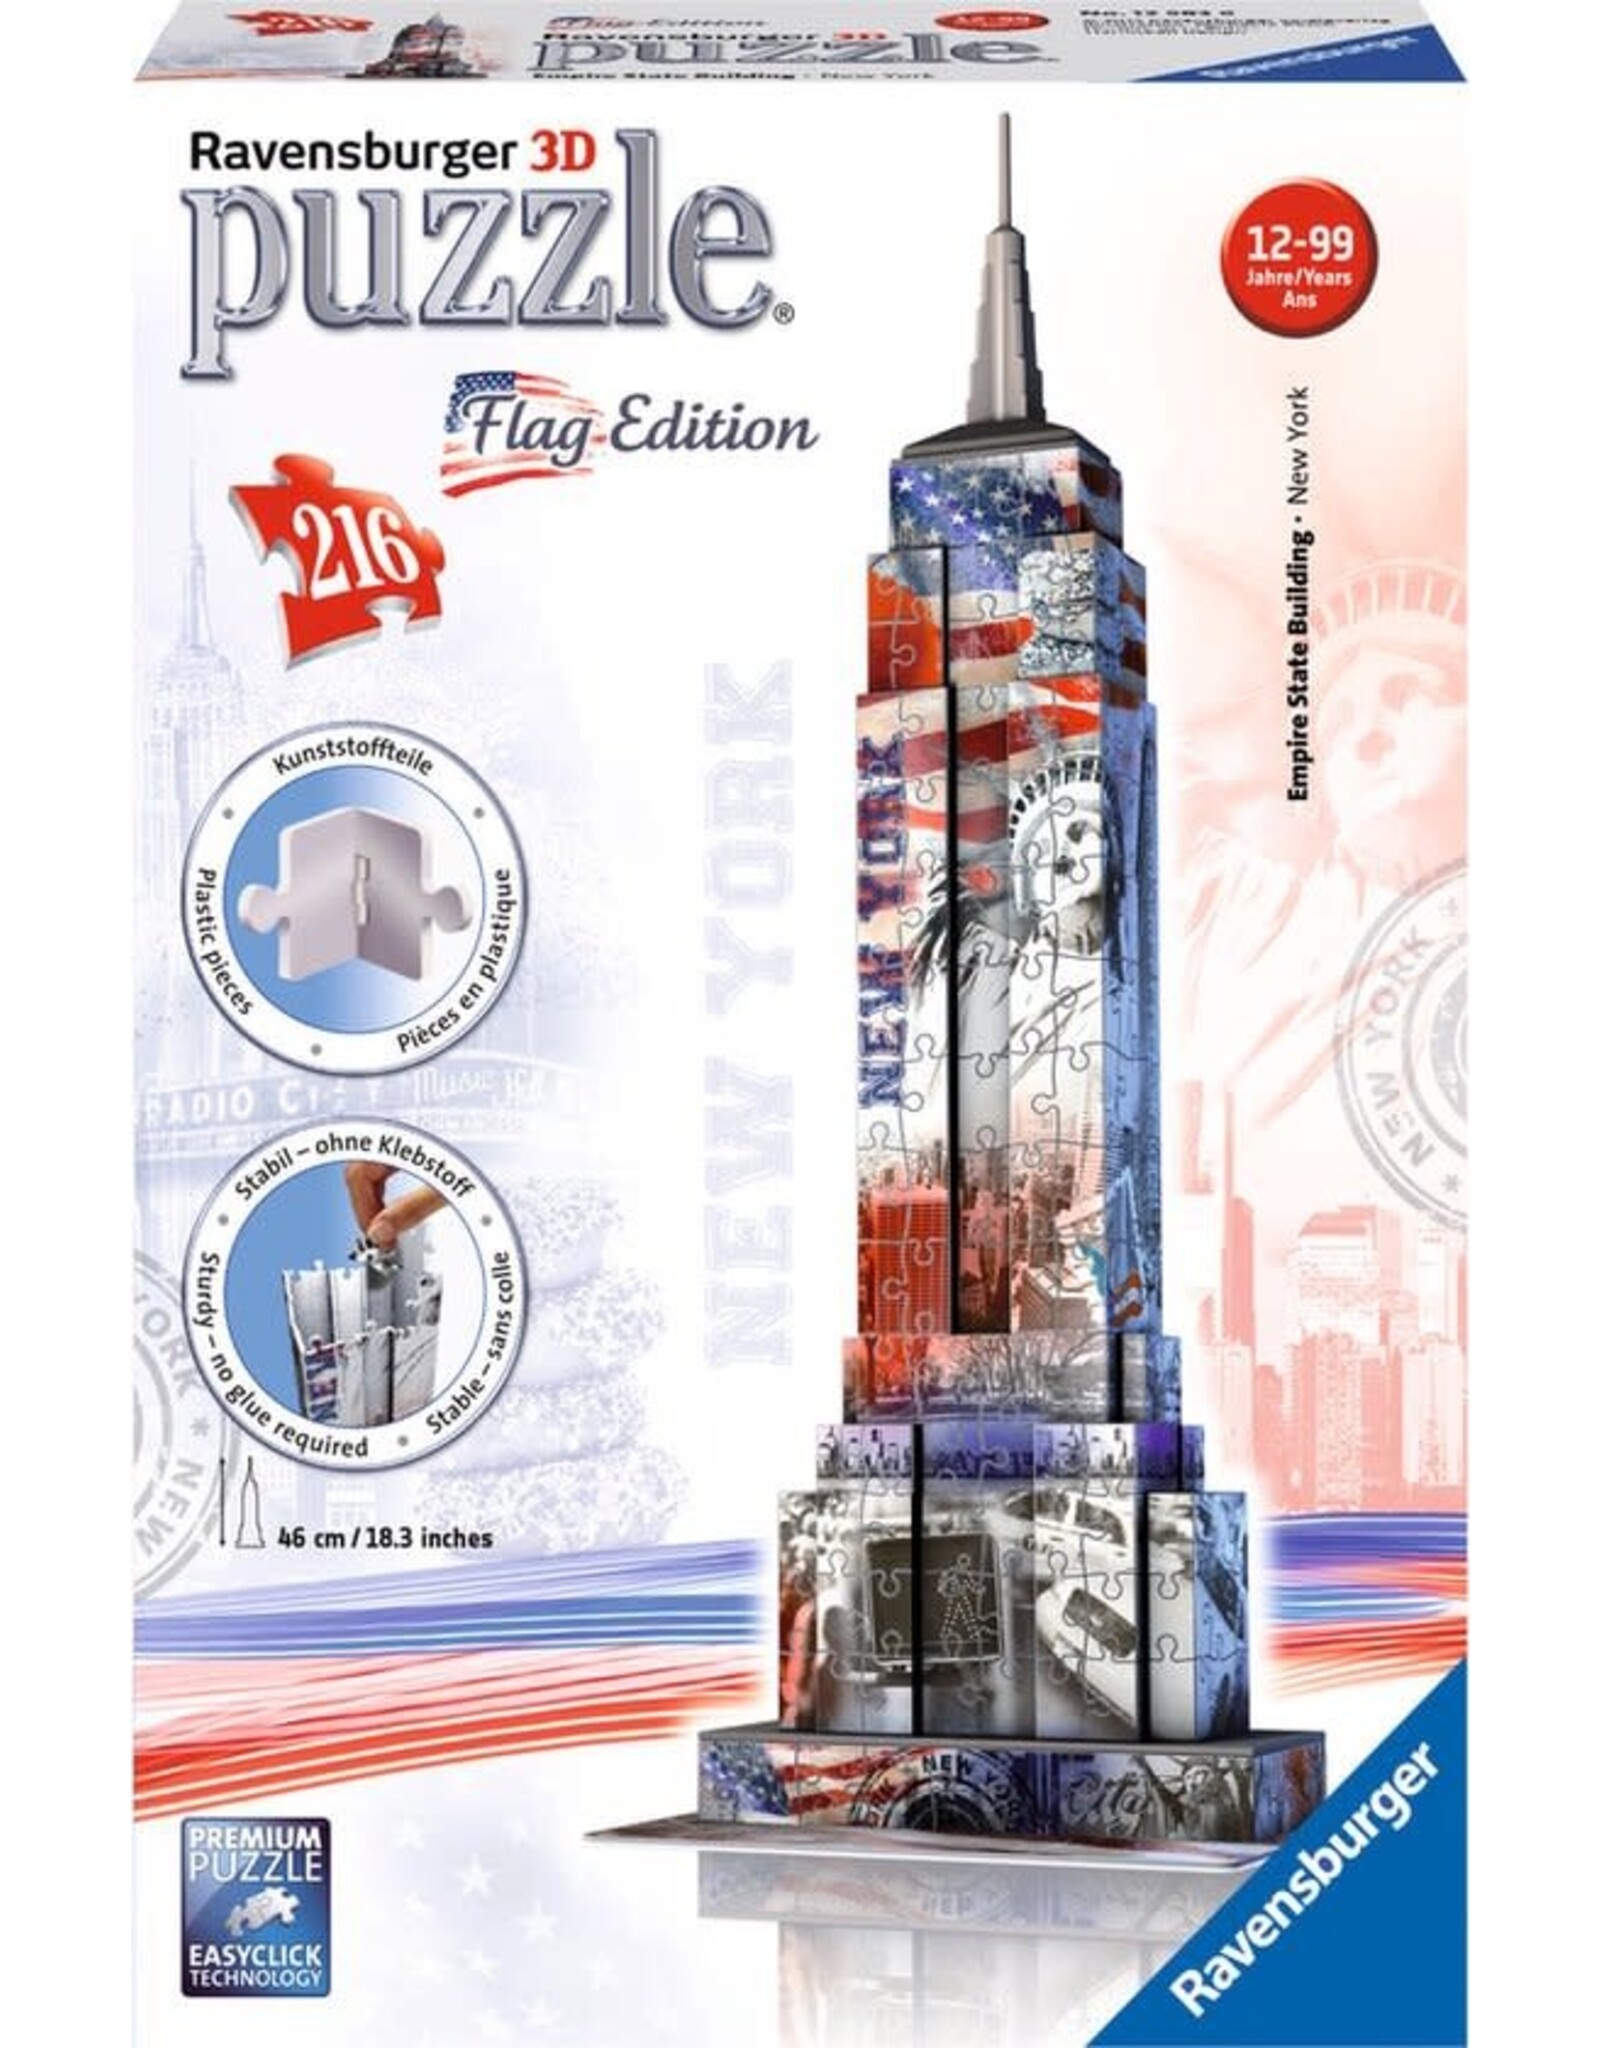 Ravensburger Ravensburger 3D Puzzel 125838 Empire State Building Flag Edition - 216 Stukjes